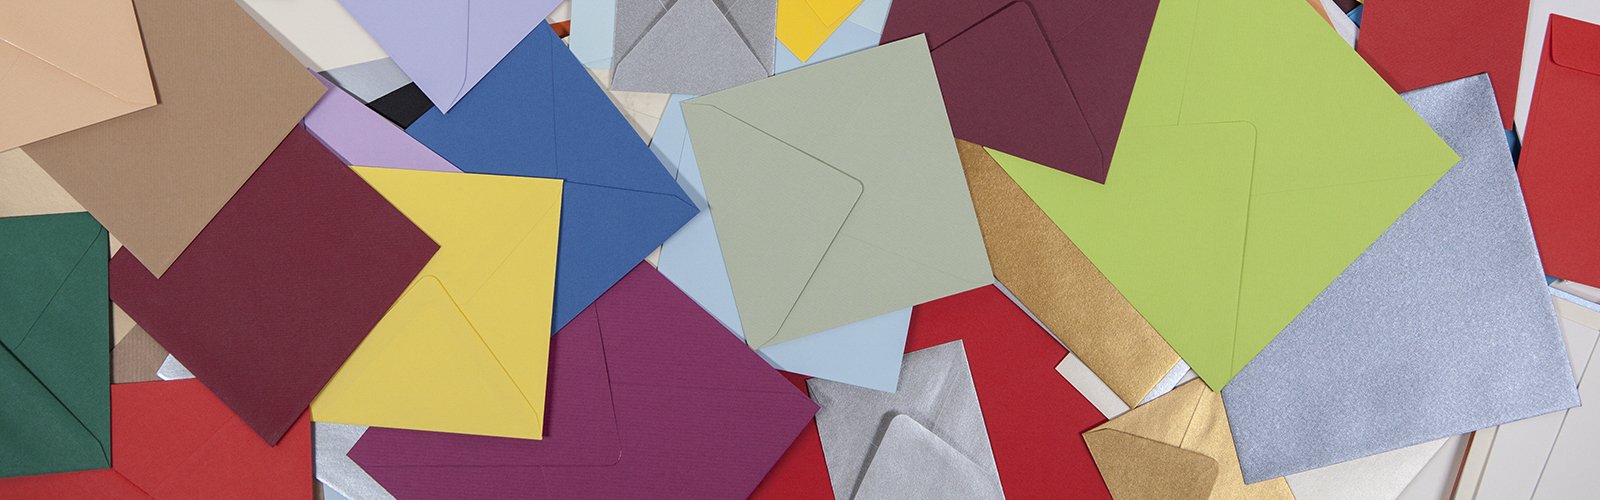 Gekleurde vierkante enveloppen